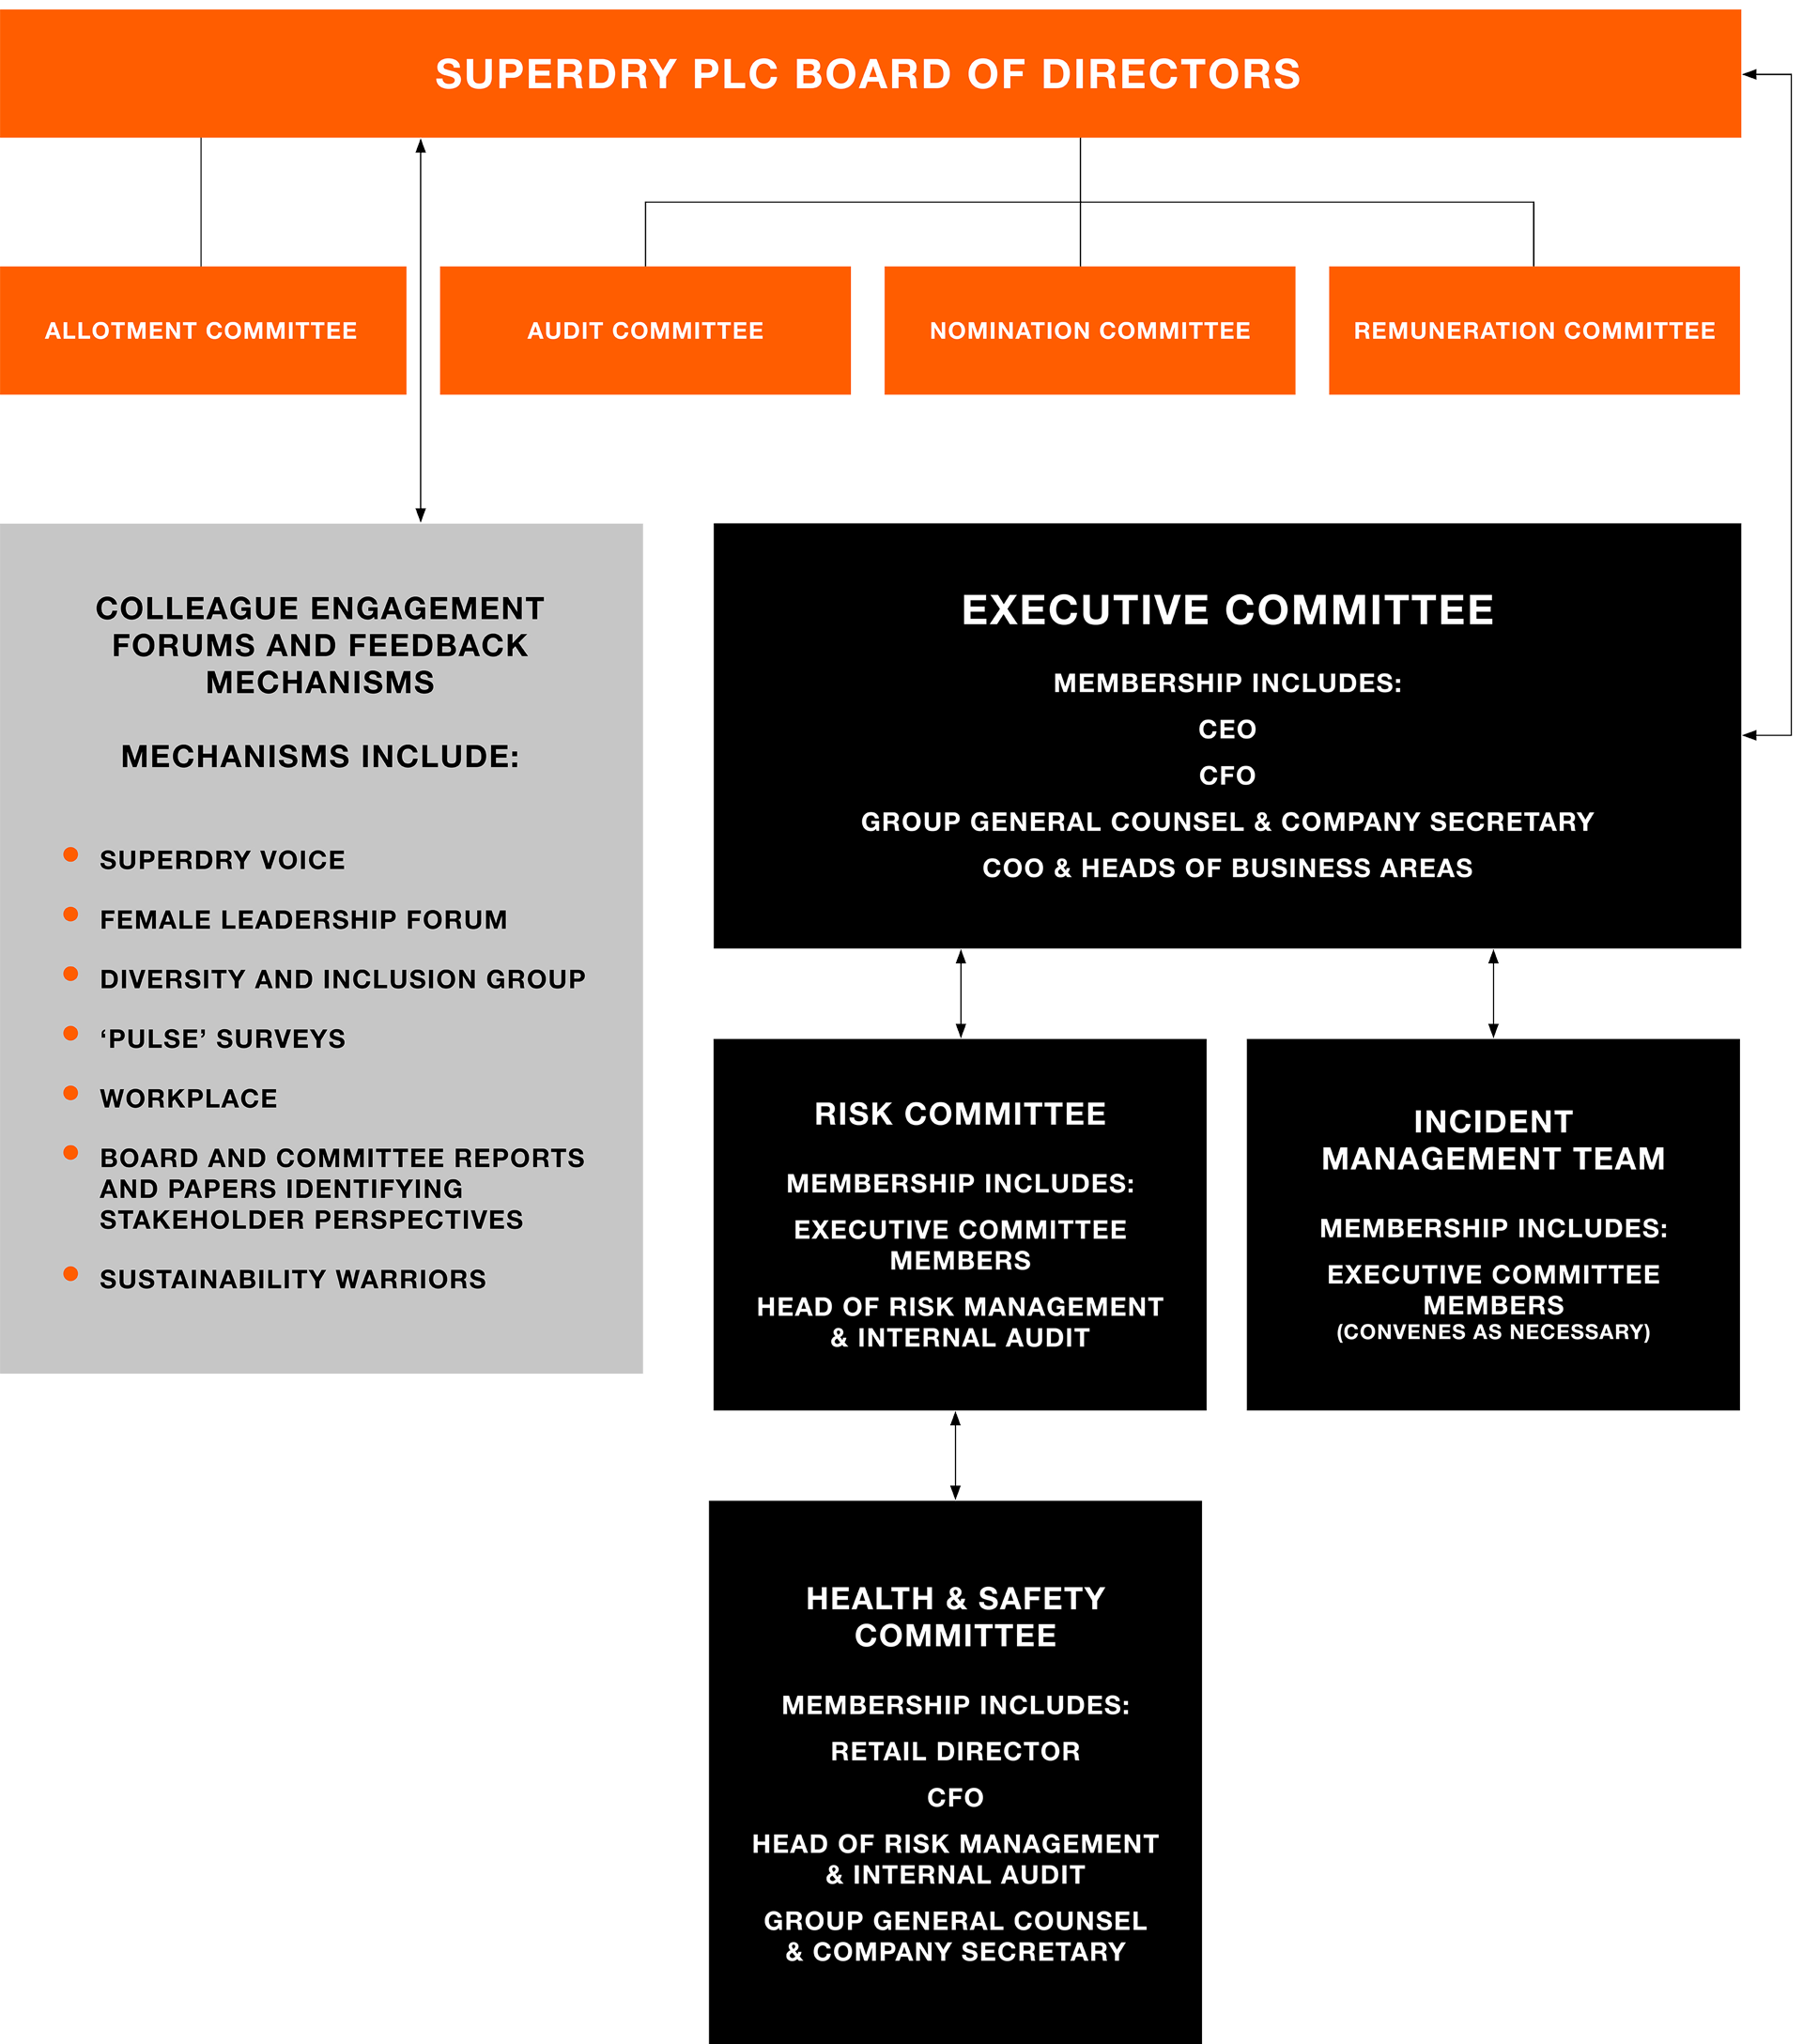 Superdry plc governance framework